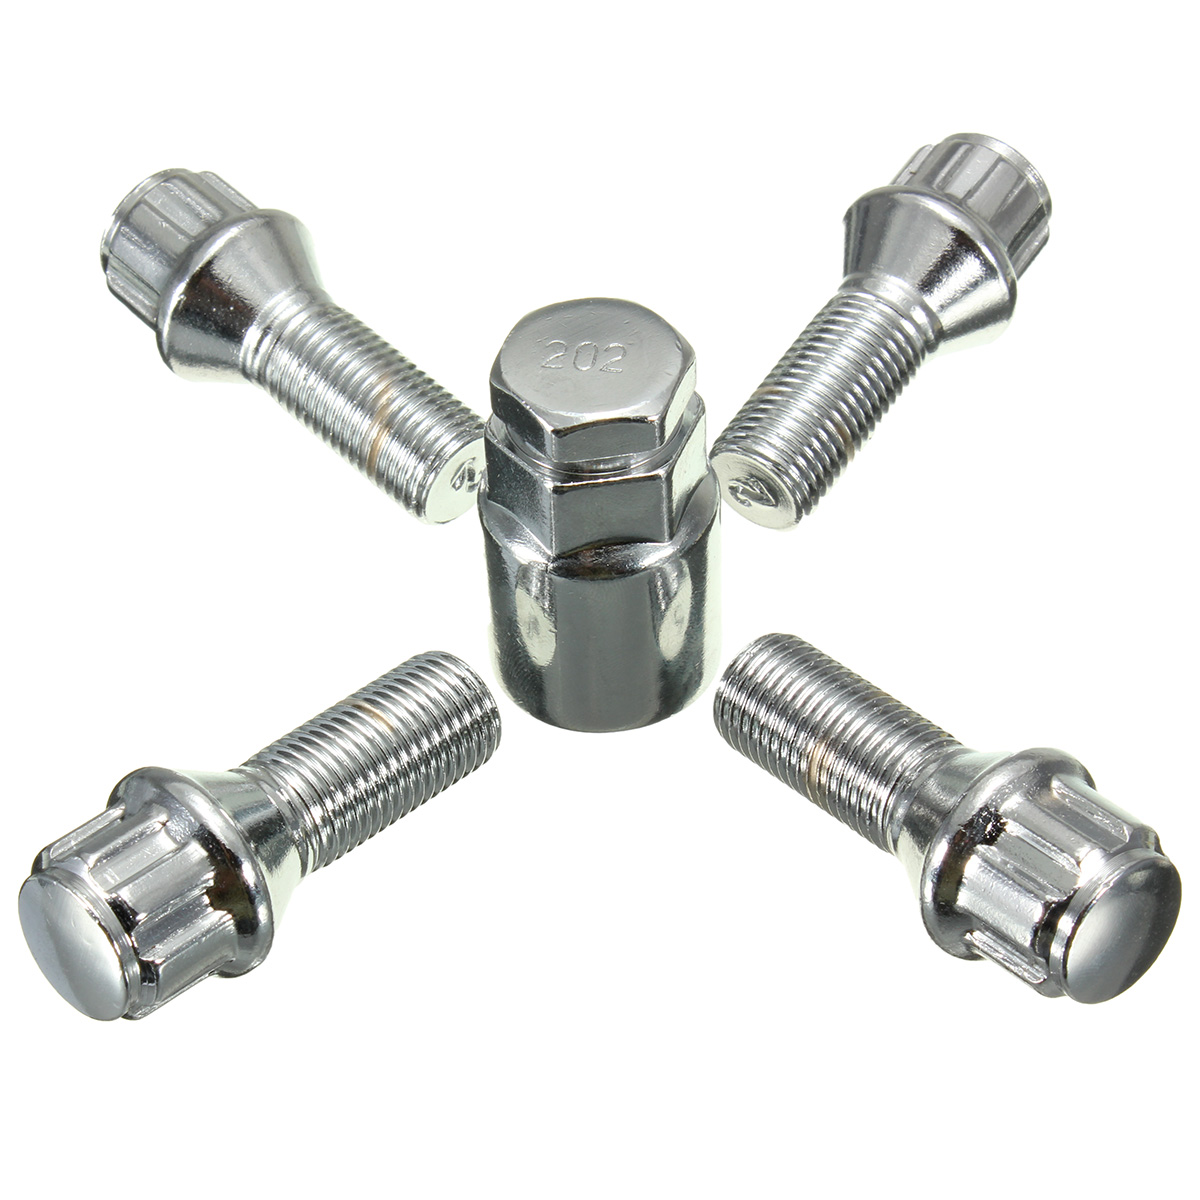 Alloy Steel Anti Theft Security Lock M12x1.5 Nut Wheel Lug Nut 1X Key+4X Locks